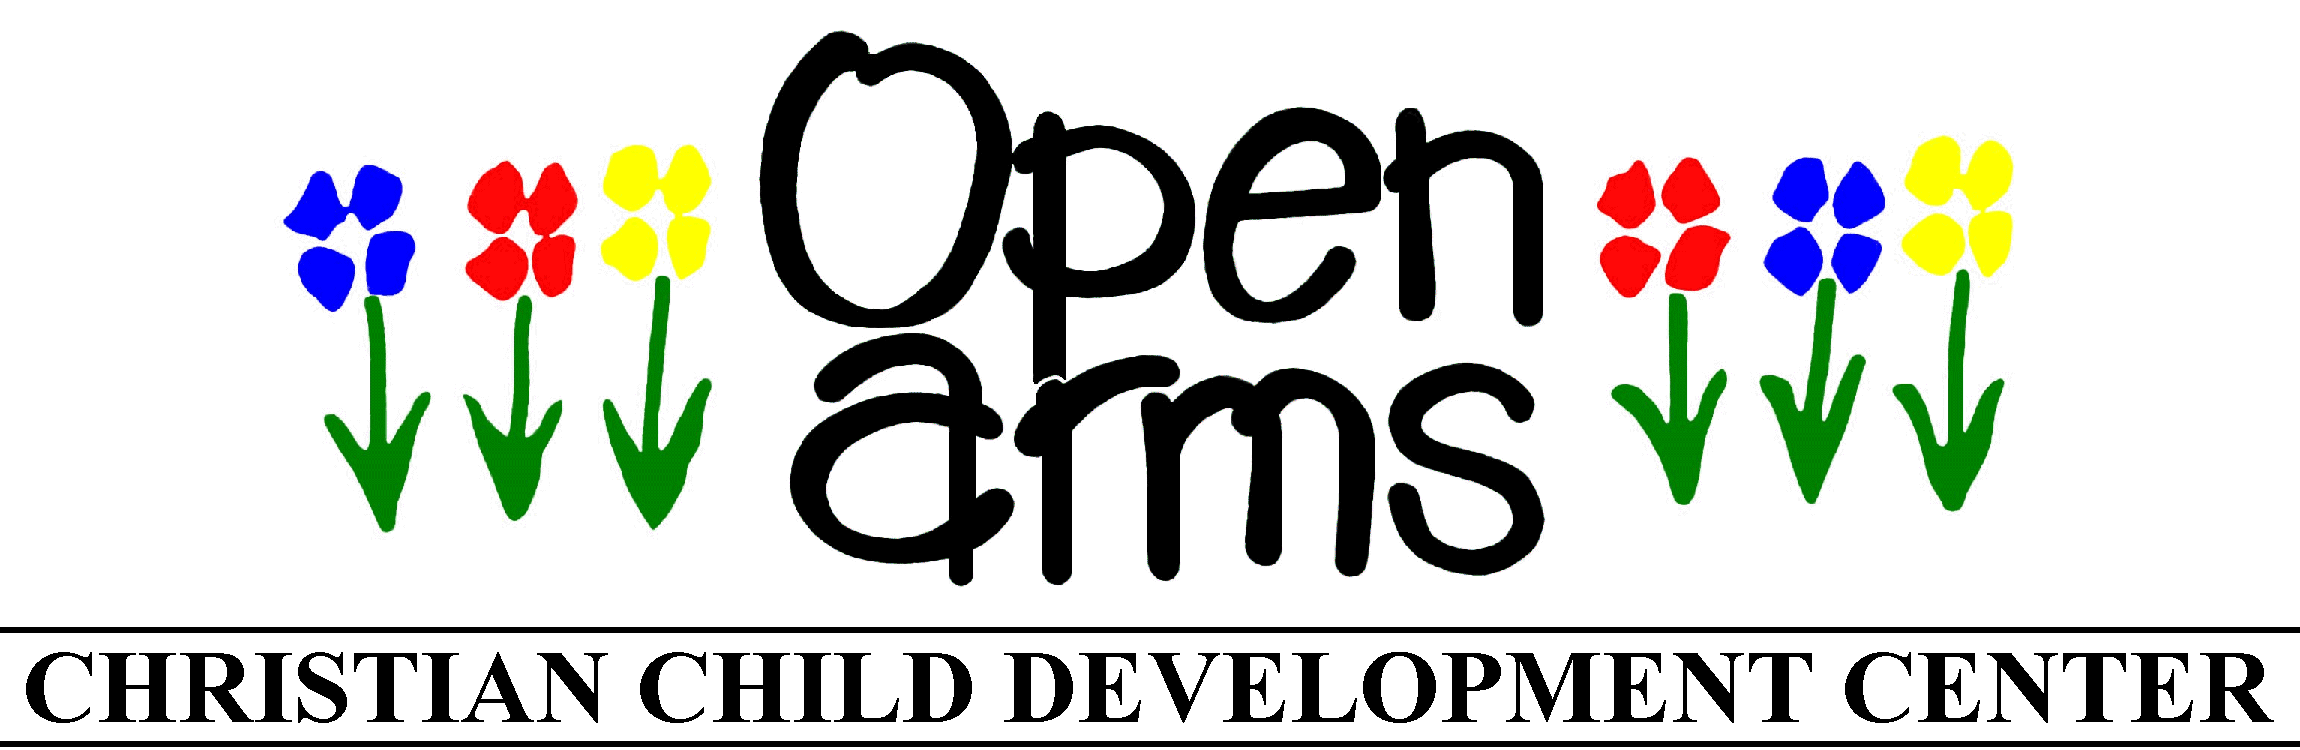 Open Arms Christian Child Development Center